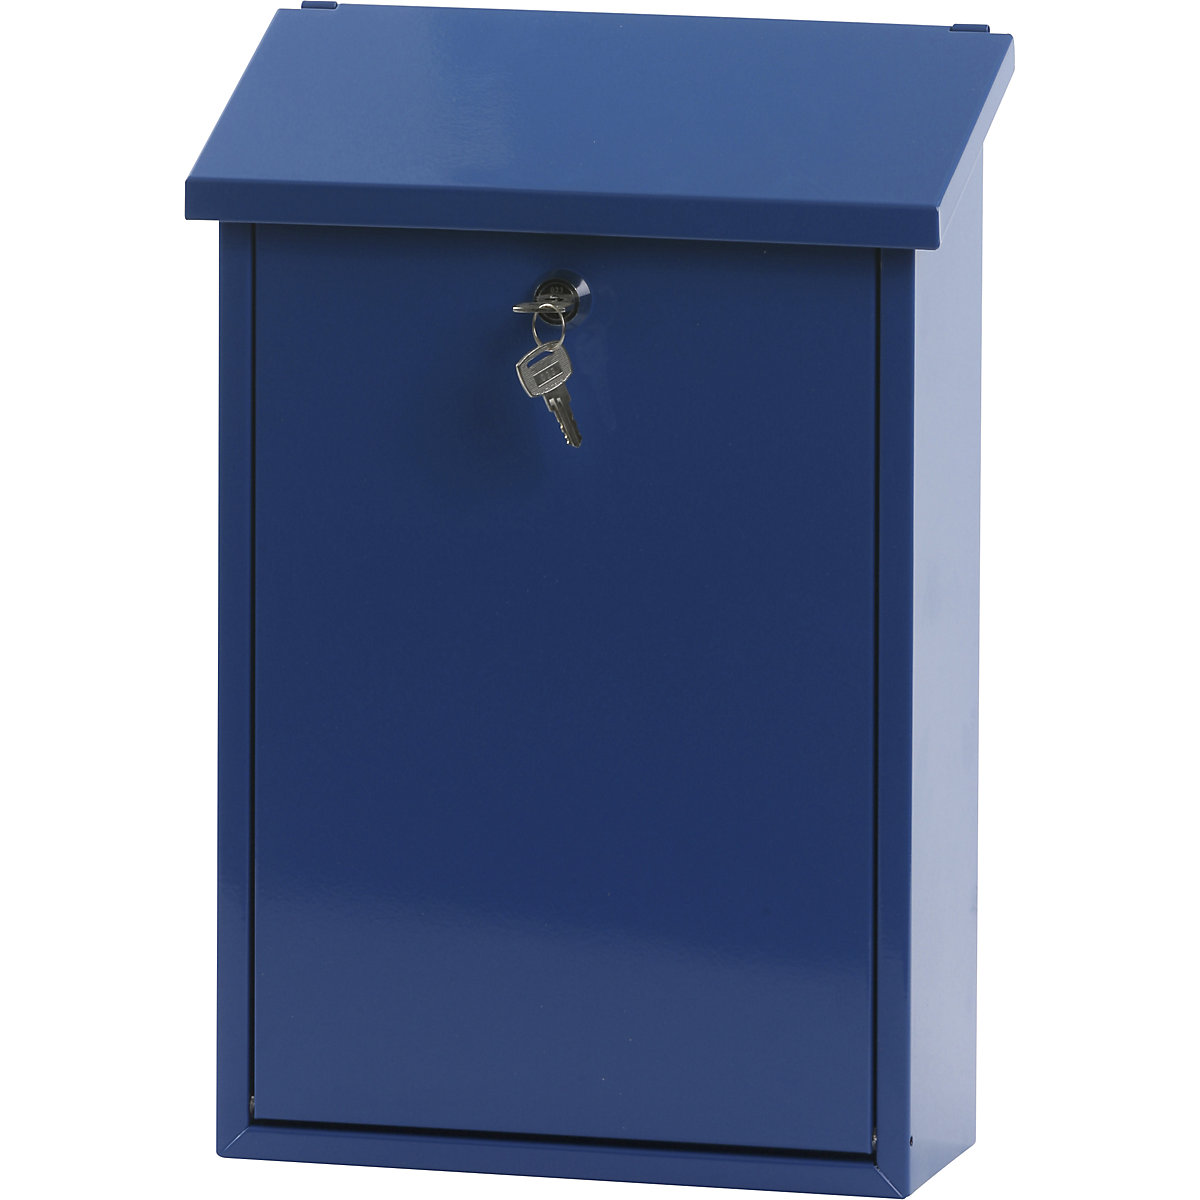 Standardni poštanski sandučić, čelični lim, praškasto lakiran, u plavoj boji RAL 5005-6